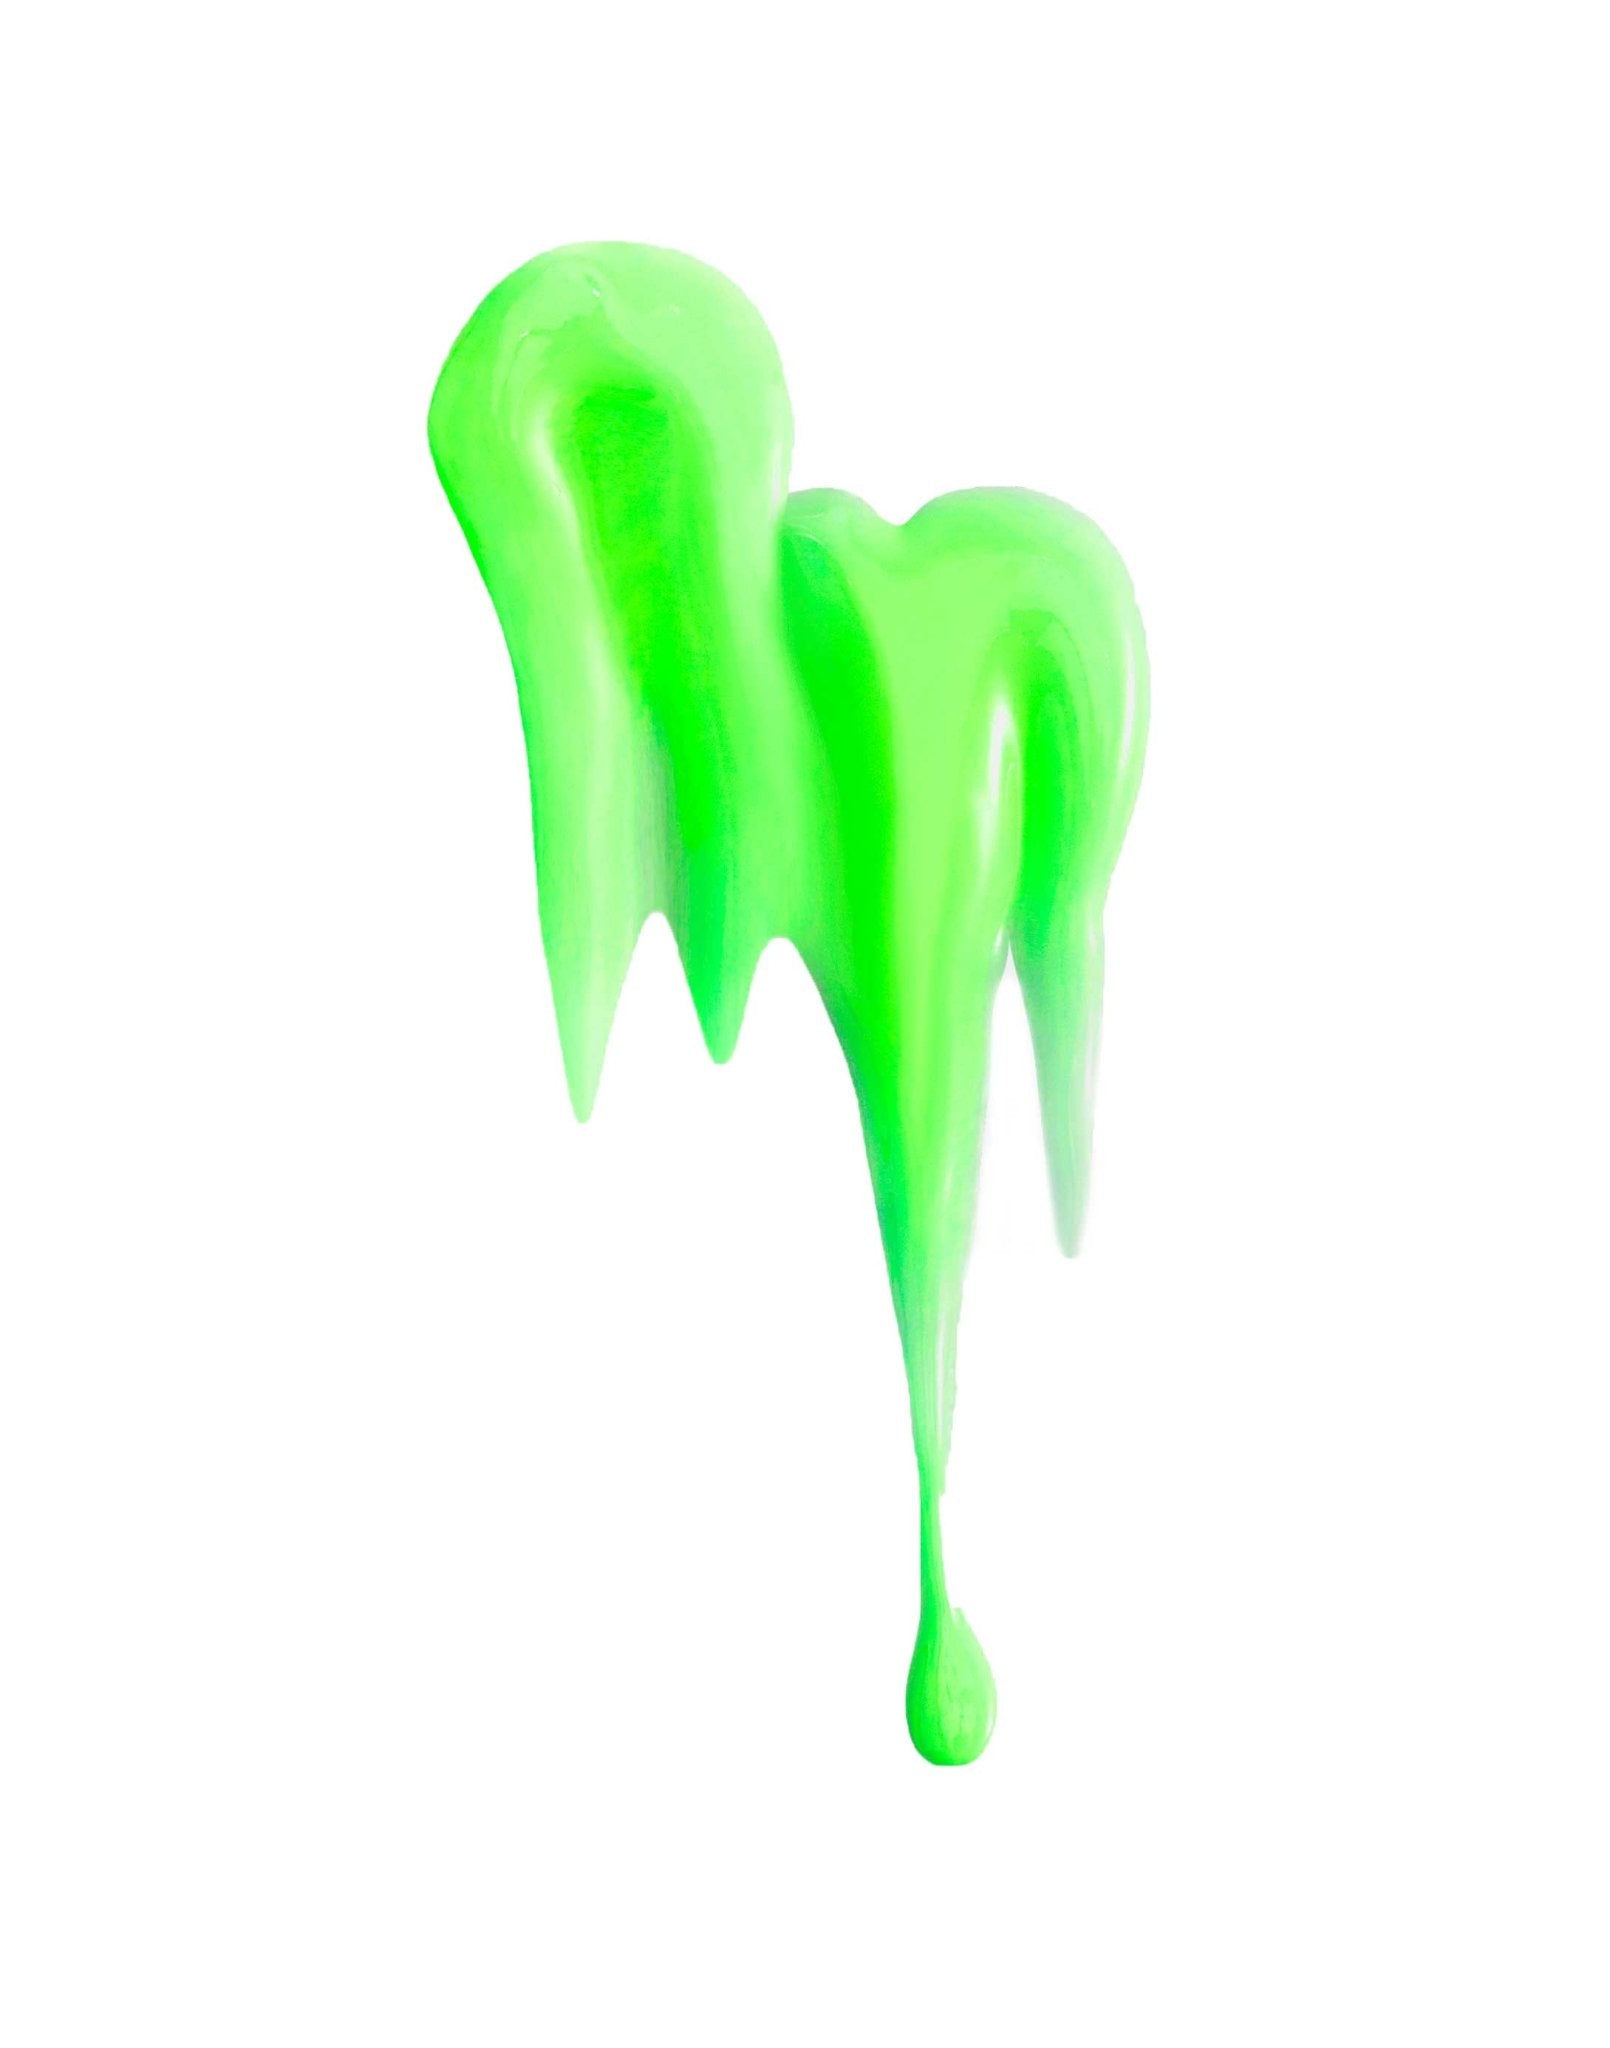 Fashion Gel - Neon Green 56 g / 1.89 oz - Tones